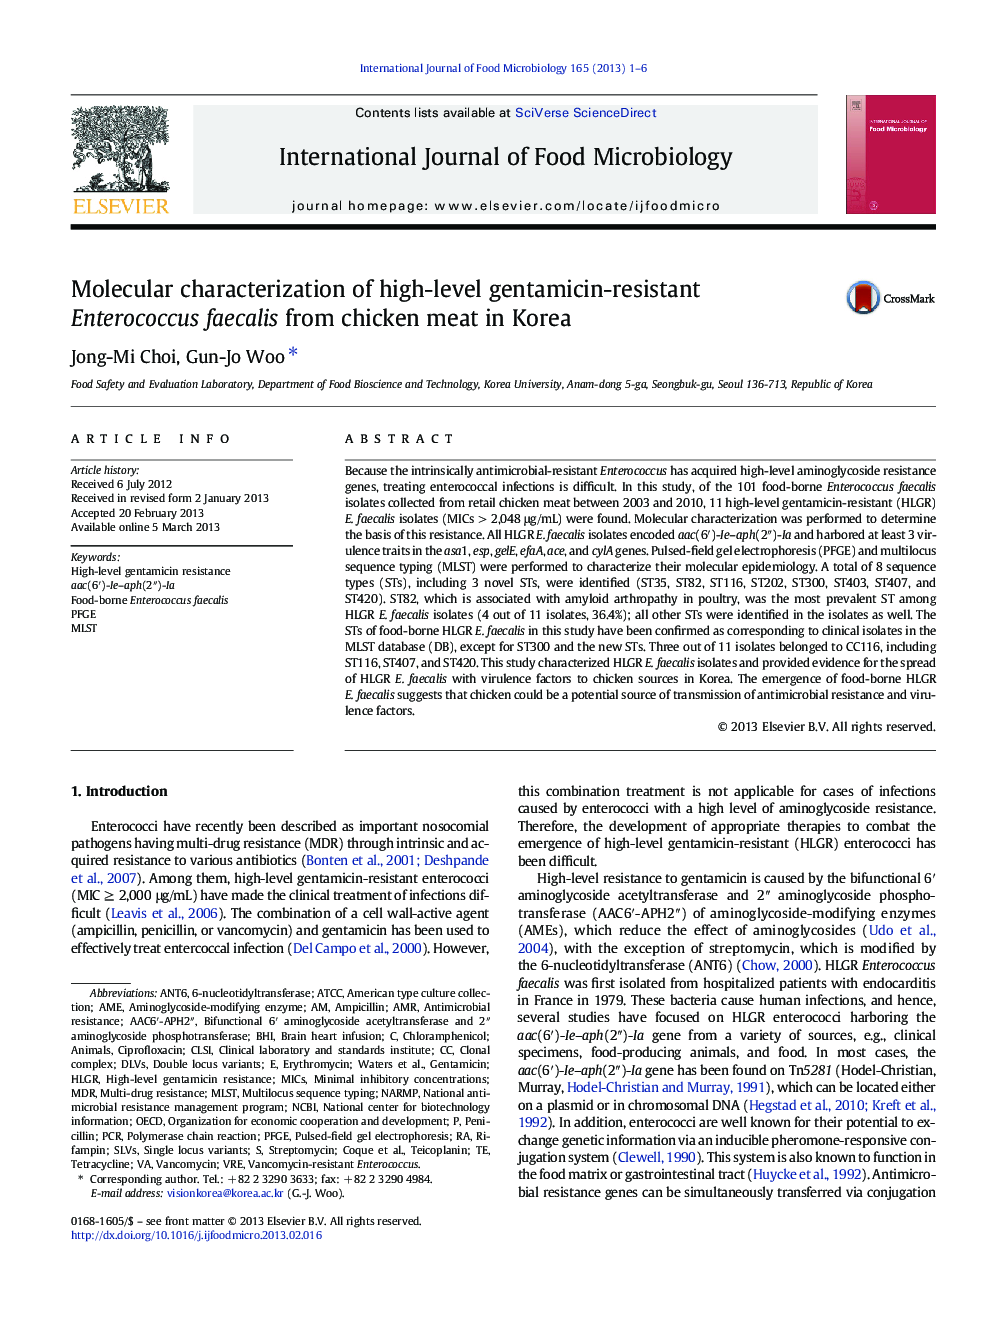 Molecular characterization of high-level gentamicin-resistant Enterococcus faecalis from chicken meat in Korea